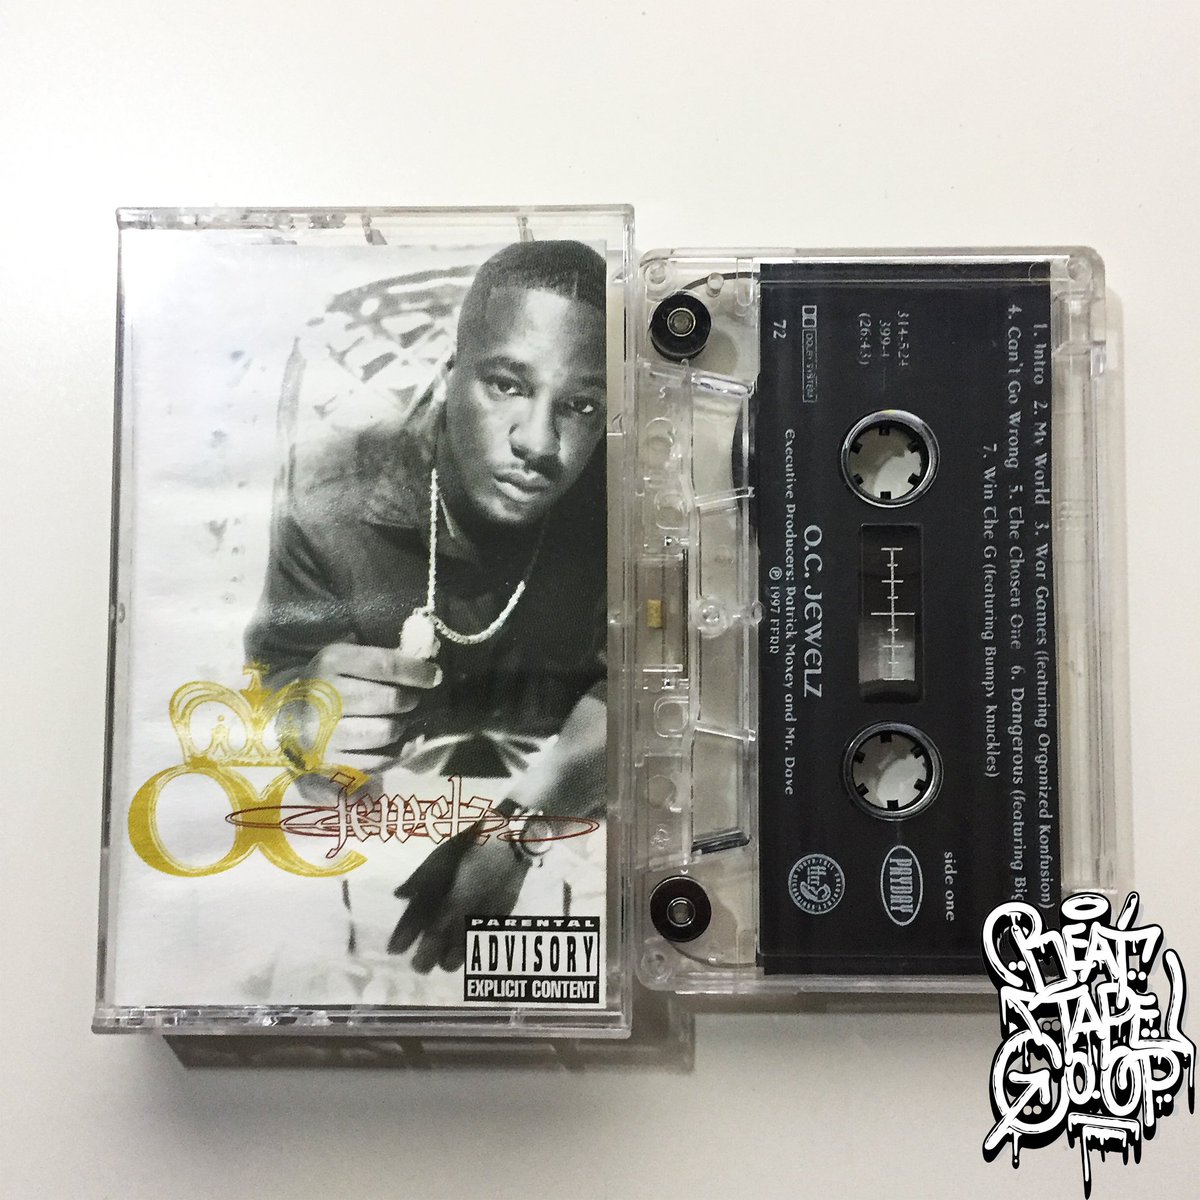 O.C. - Jewelz
Released On: August 19, 1997

#oc #hiphop #ditc #boombap #djpremier #djogee #mrwalt #dabeatminerz #buckwild #showbiz #lordfinesse #cassette #tape #organizedkonfusion #bigl #freddiefoxxx #yvettemichele #rocraida #uniquestudios #ddstudios #payday